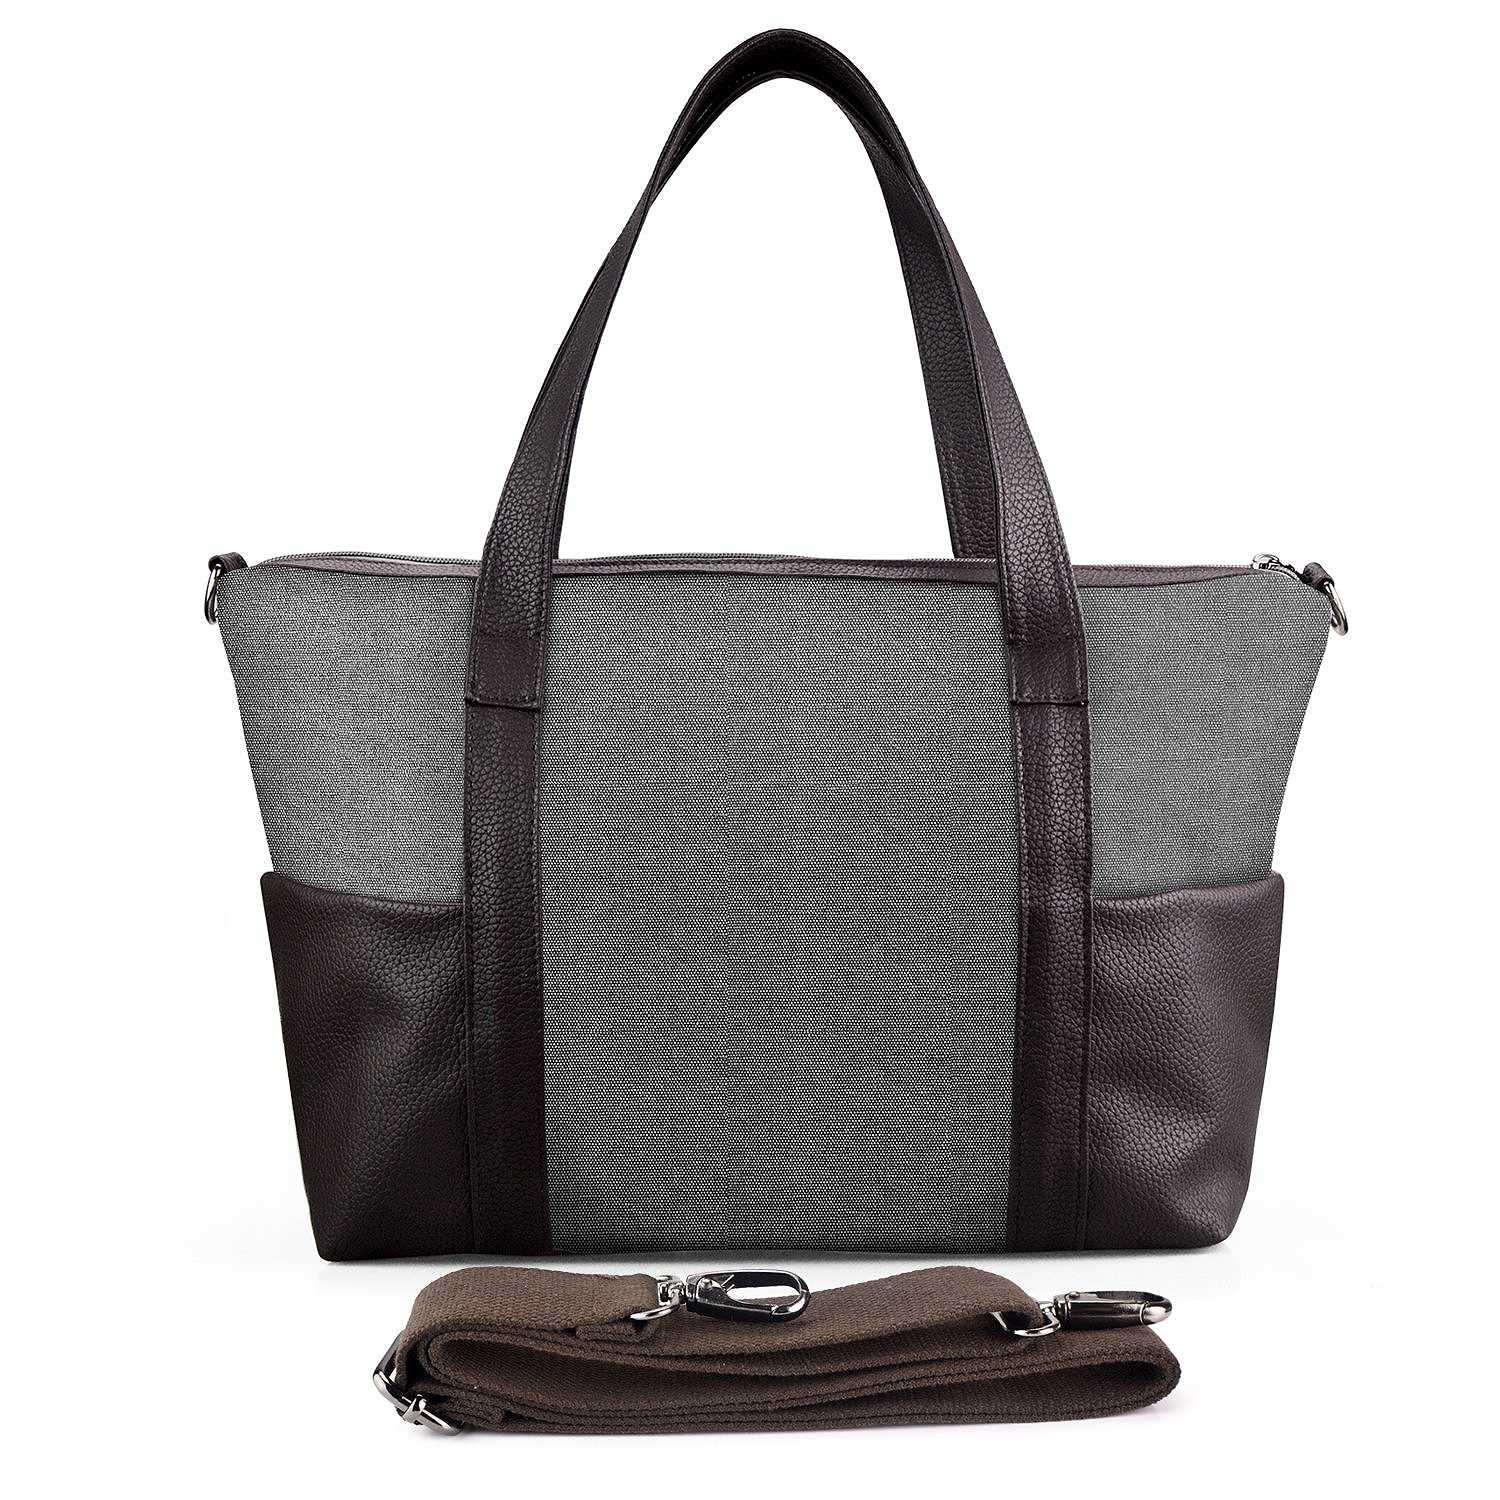 Canvas Handbags Crossbody Bags For Women Tote Bags Shoulder Bag Hobo Purse Handle Handbags - ebowsos